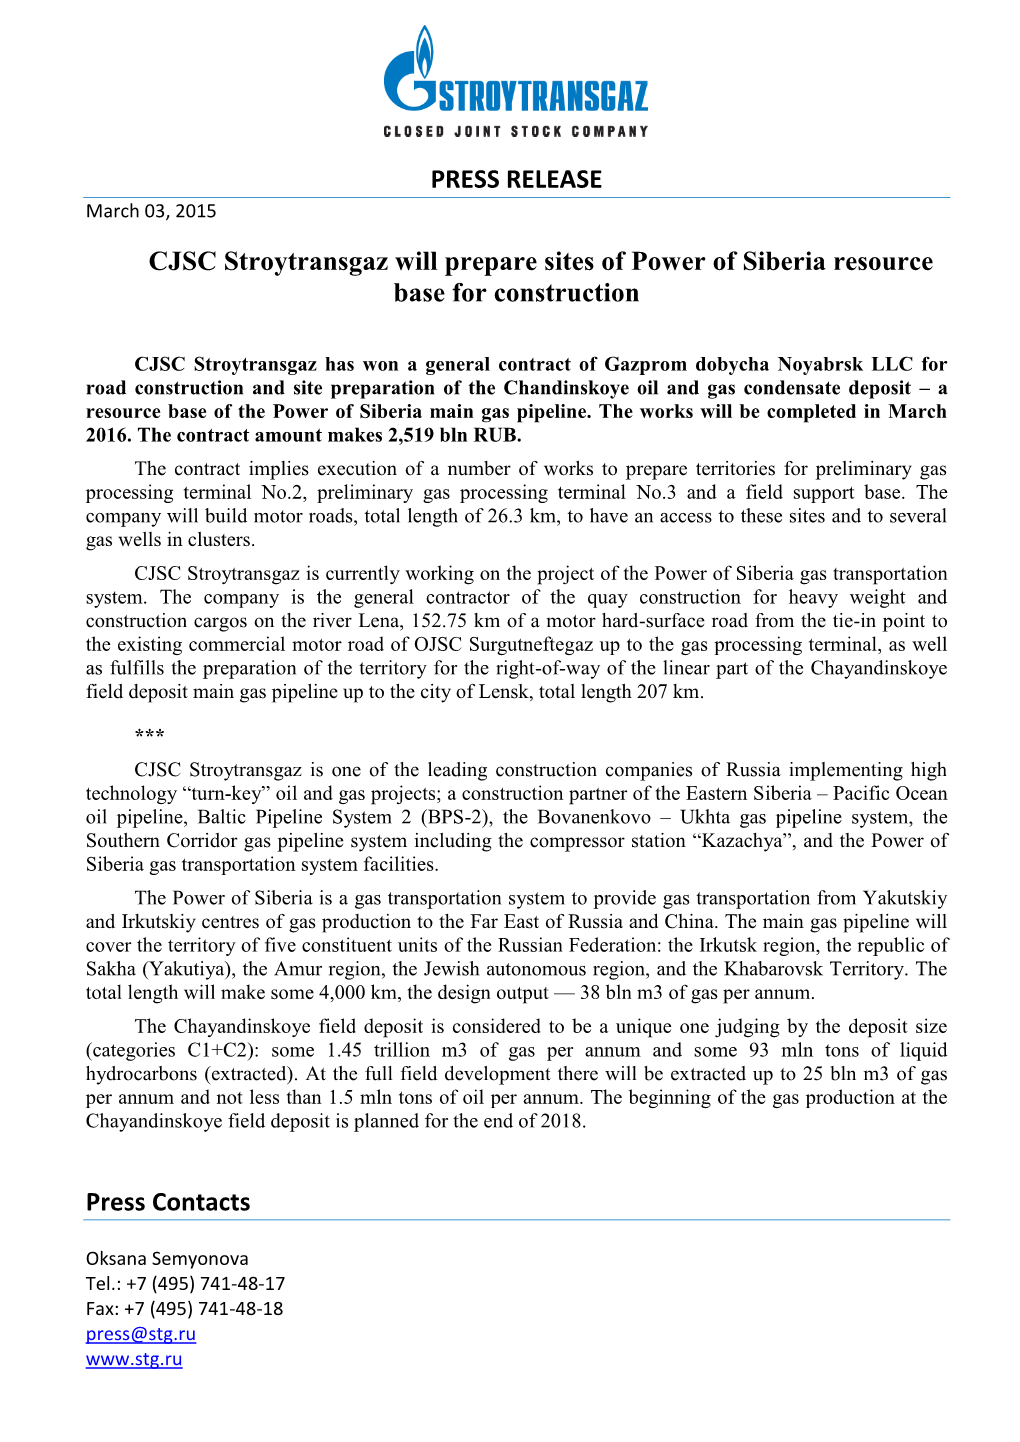 PRESS RELEASE CJSC Stroytransgaz Will Prepare Sites of Power